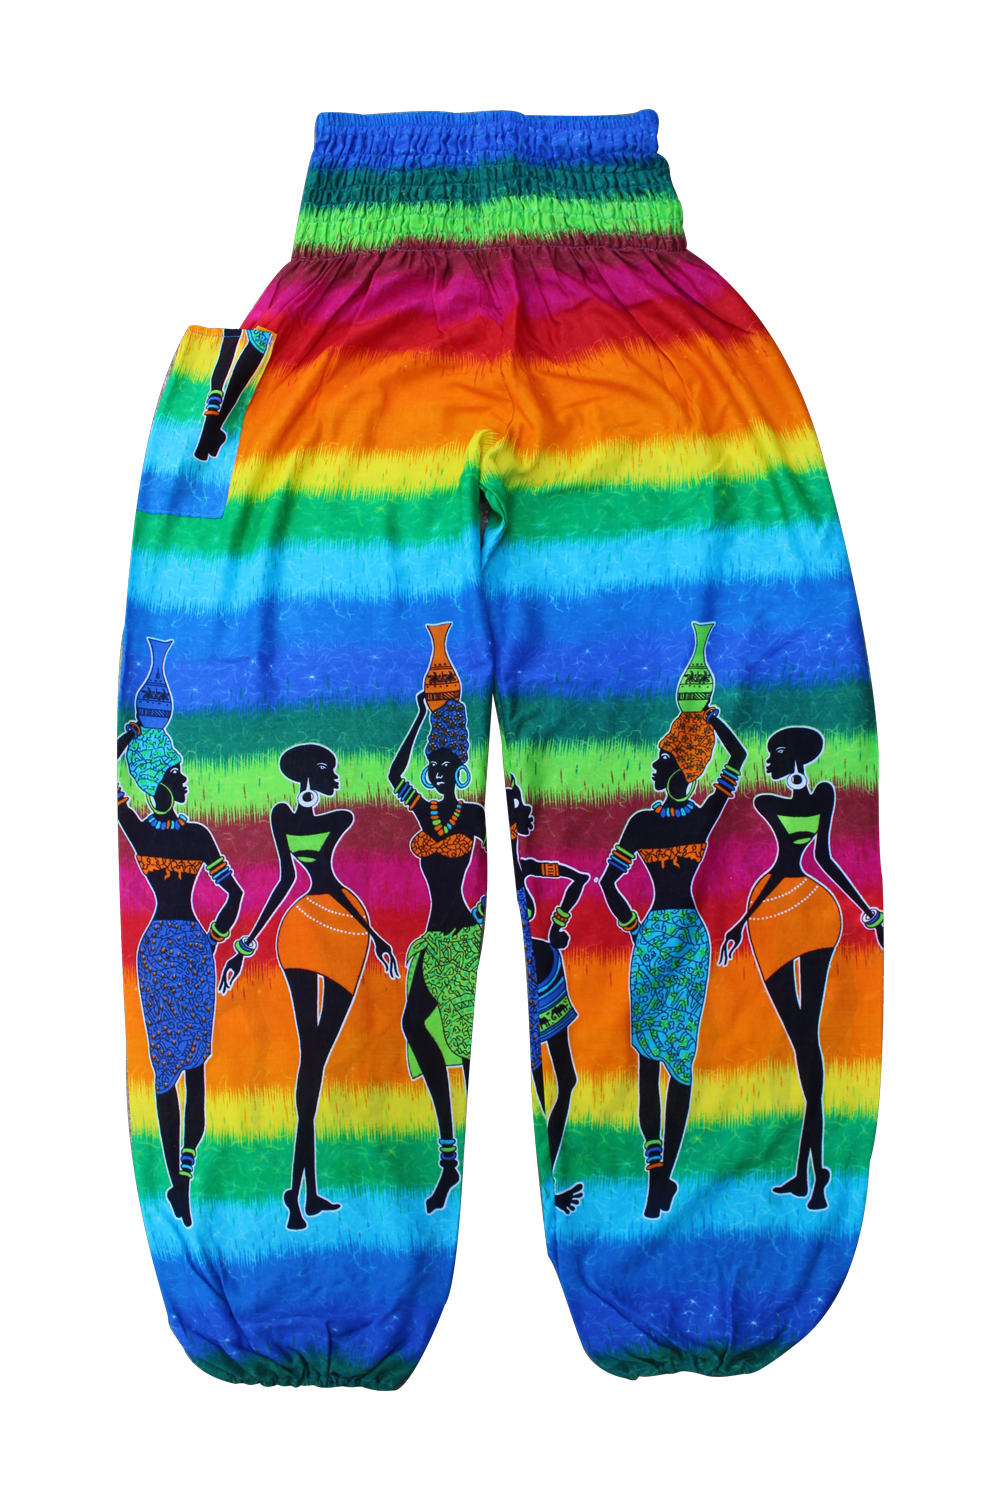 Ultimate Rainbow Festival Harem Trousers